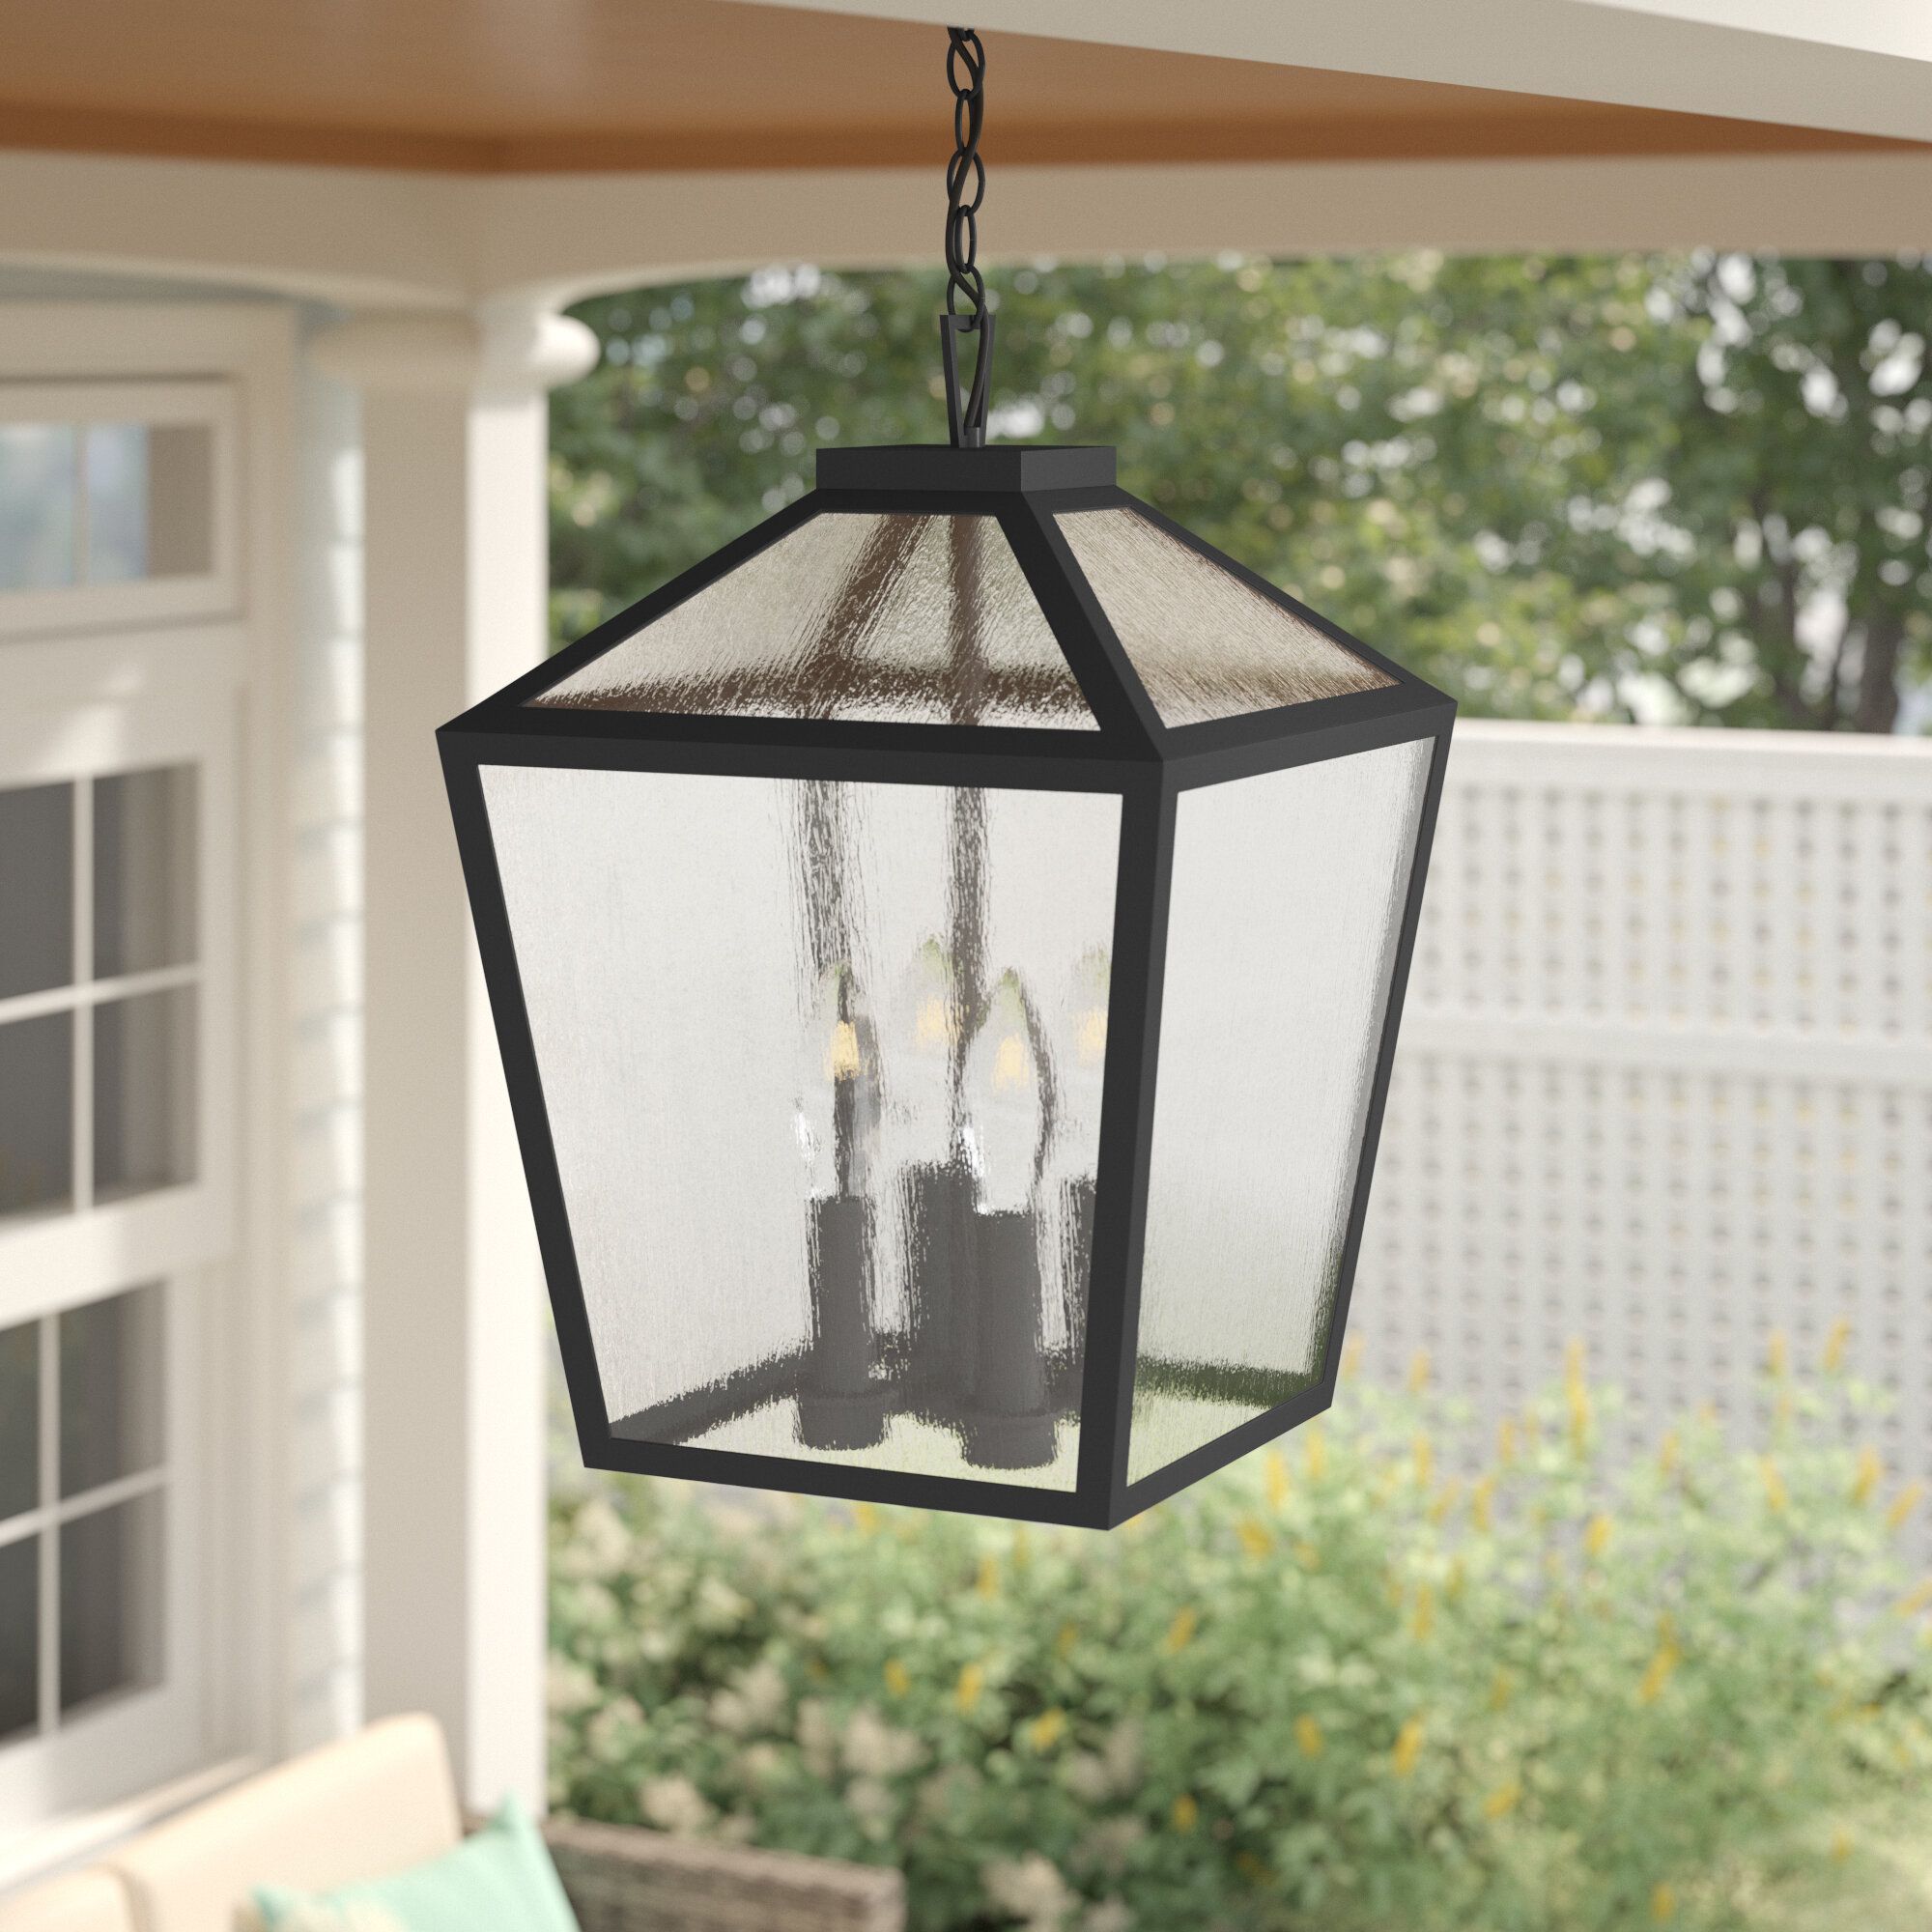 Wayfair | Outdoor Hanging Lights With Regard To 27 Inch Lantern Chandeliers (View 9 of 15)